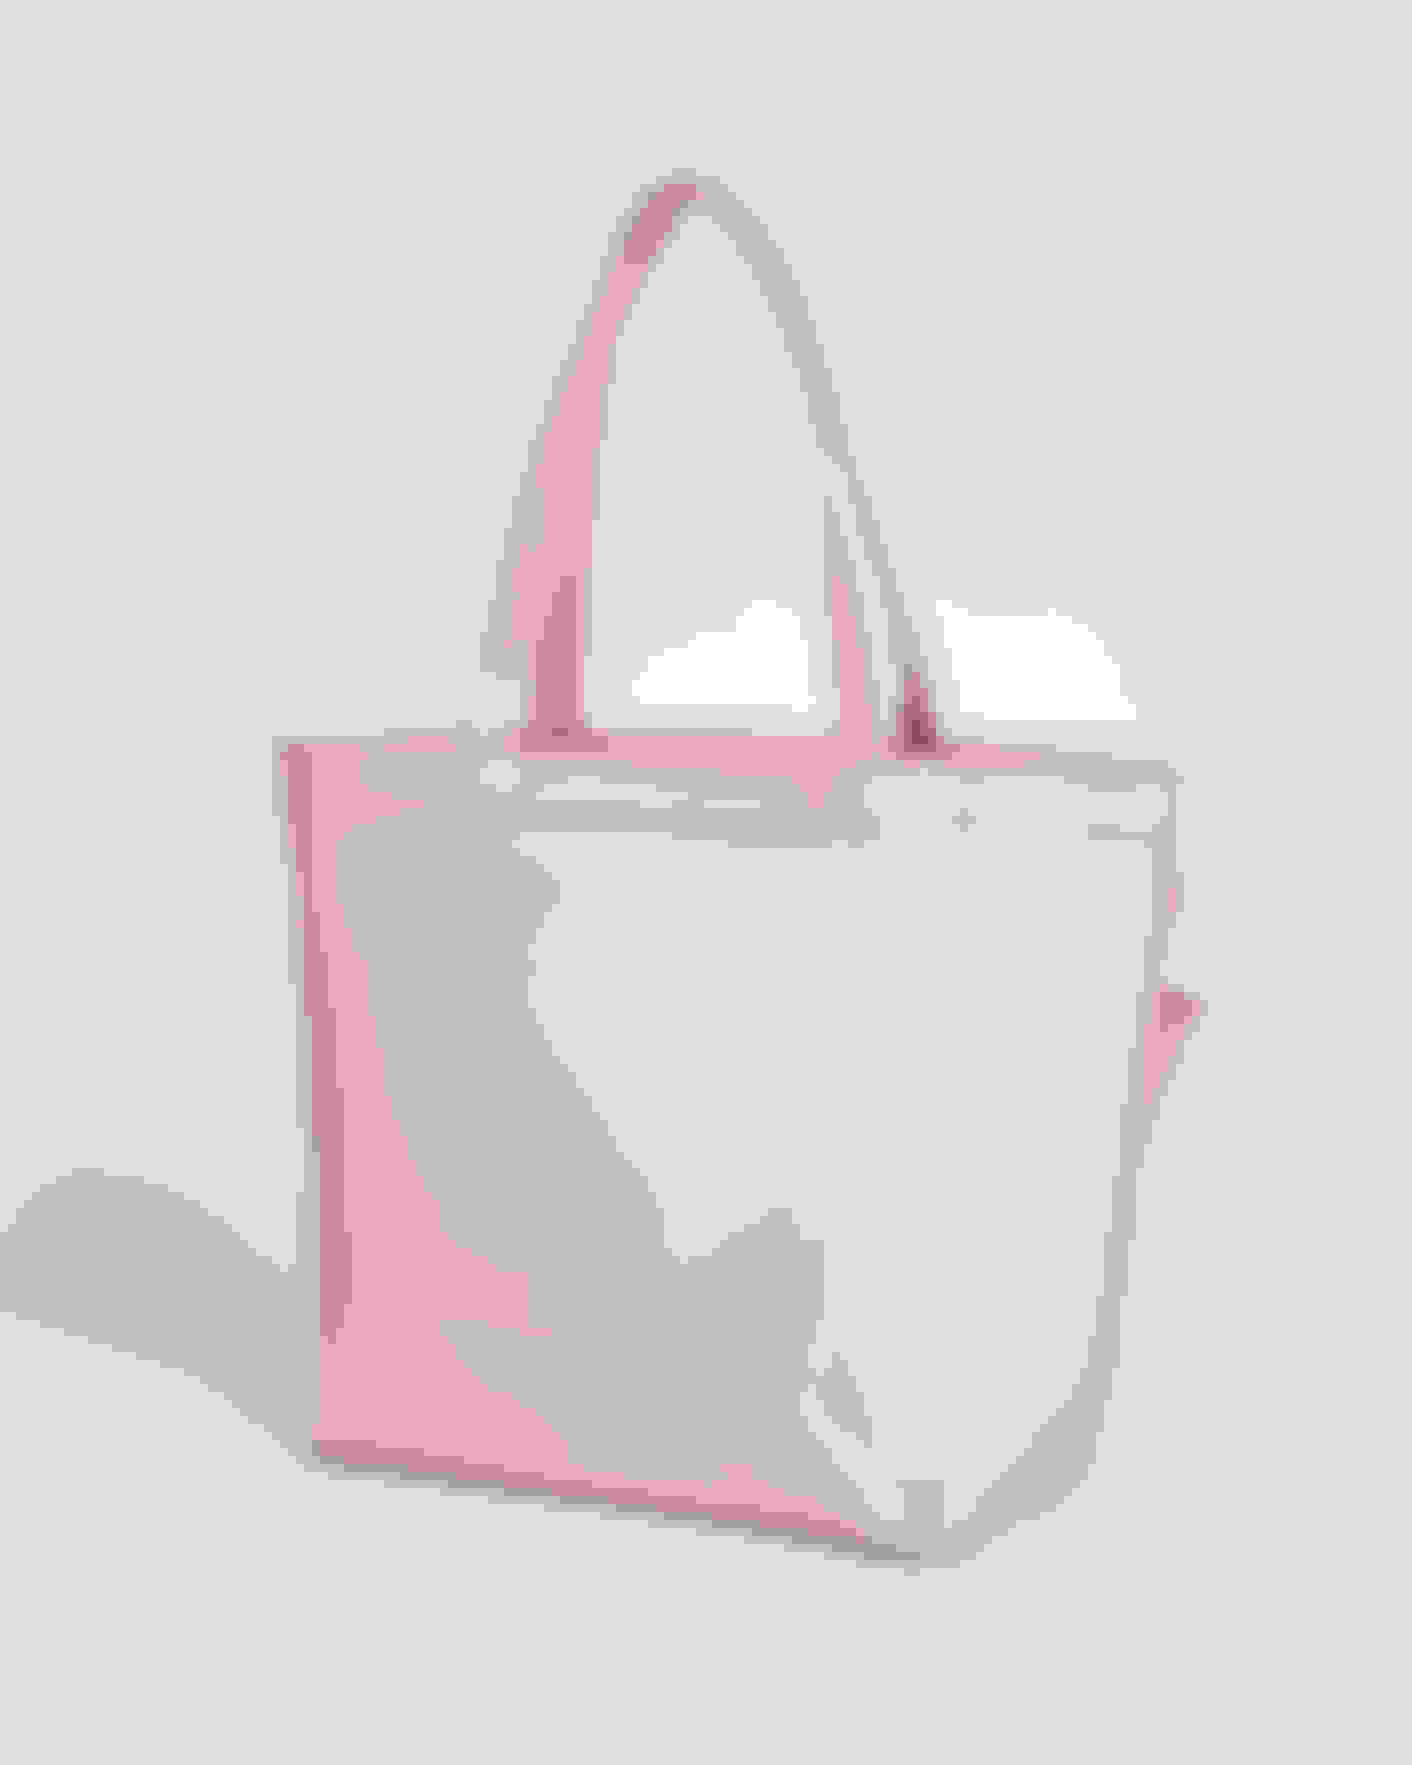 Bolso transparente rosa con zapatos de mujer rosados sobre un fondo blanco